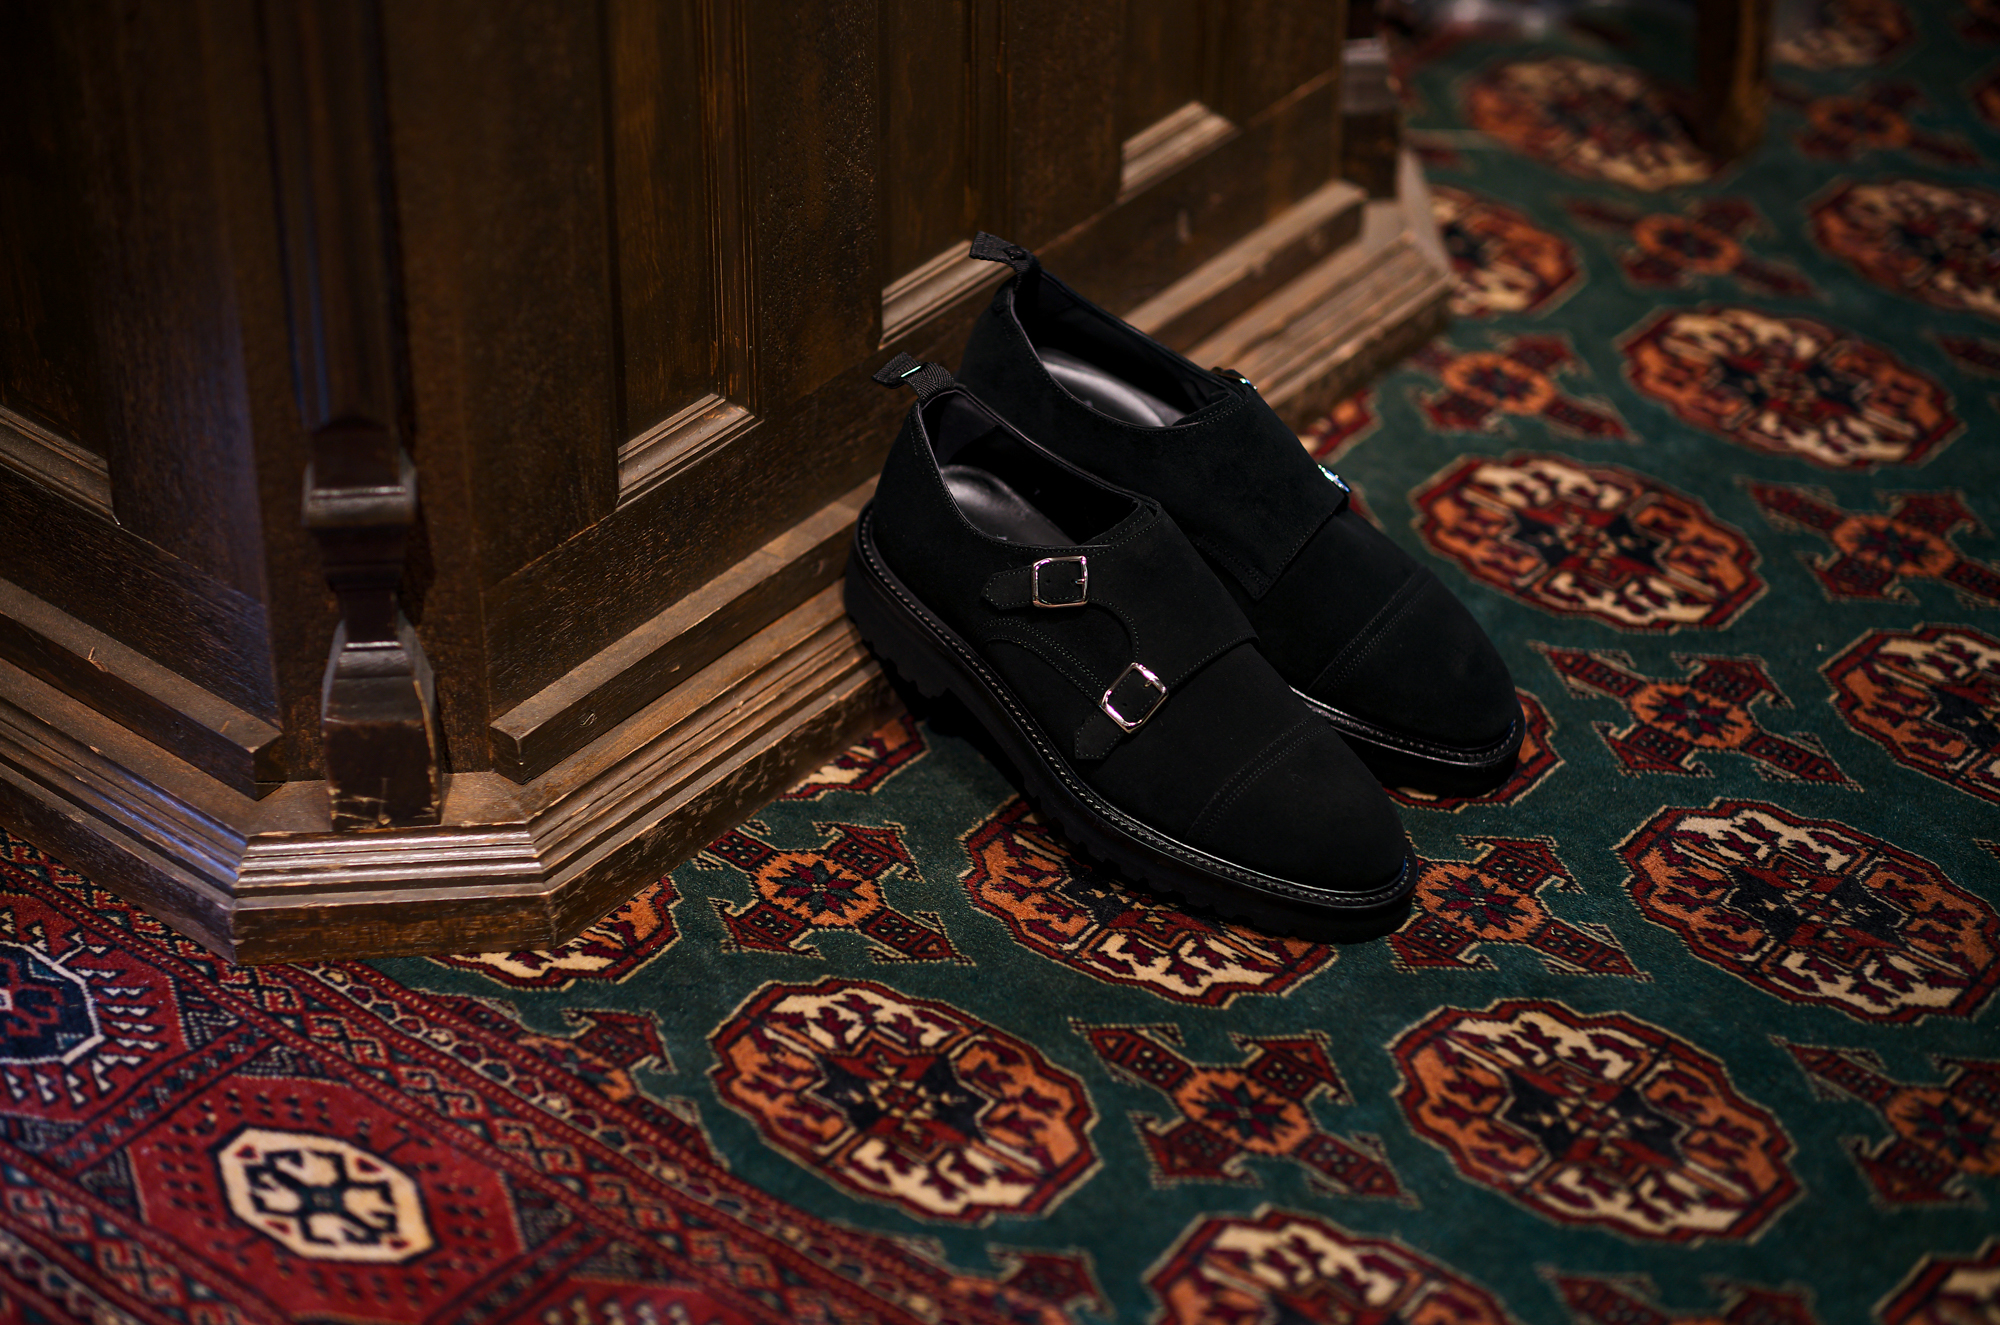 WH WHS-0300 CHARLES F. STEAD SUPER BUCK Double Monk Strap Shoes BLACK 2023 【Size 7】 ダブルエイチ ダブルモンクストラップシューズ スエード ブラック 愛知 名古屋 Alto e Diritto altoediritto アルトエデリット サイドジップブーツ プレーントゥーシューズ